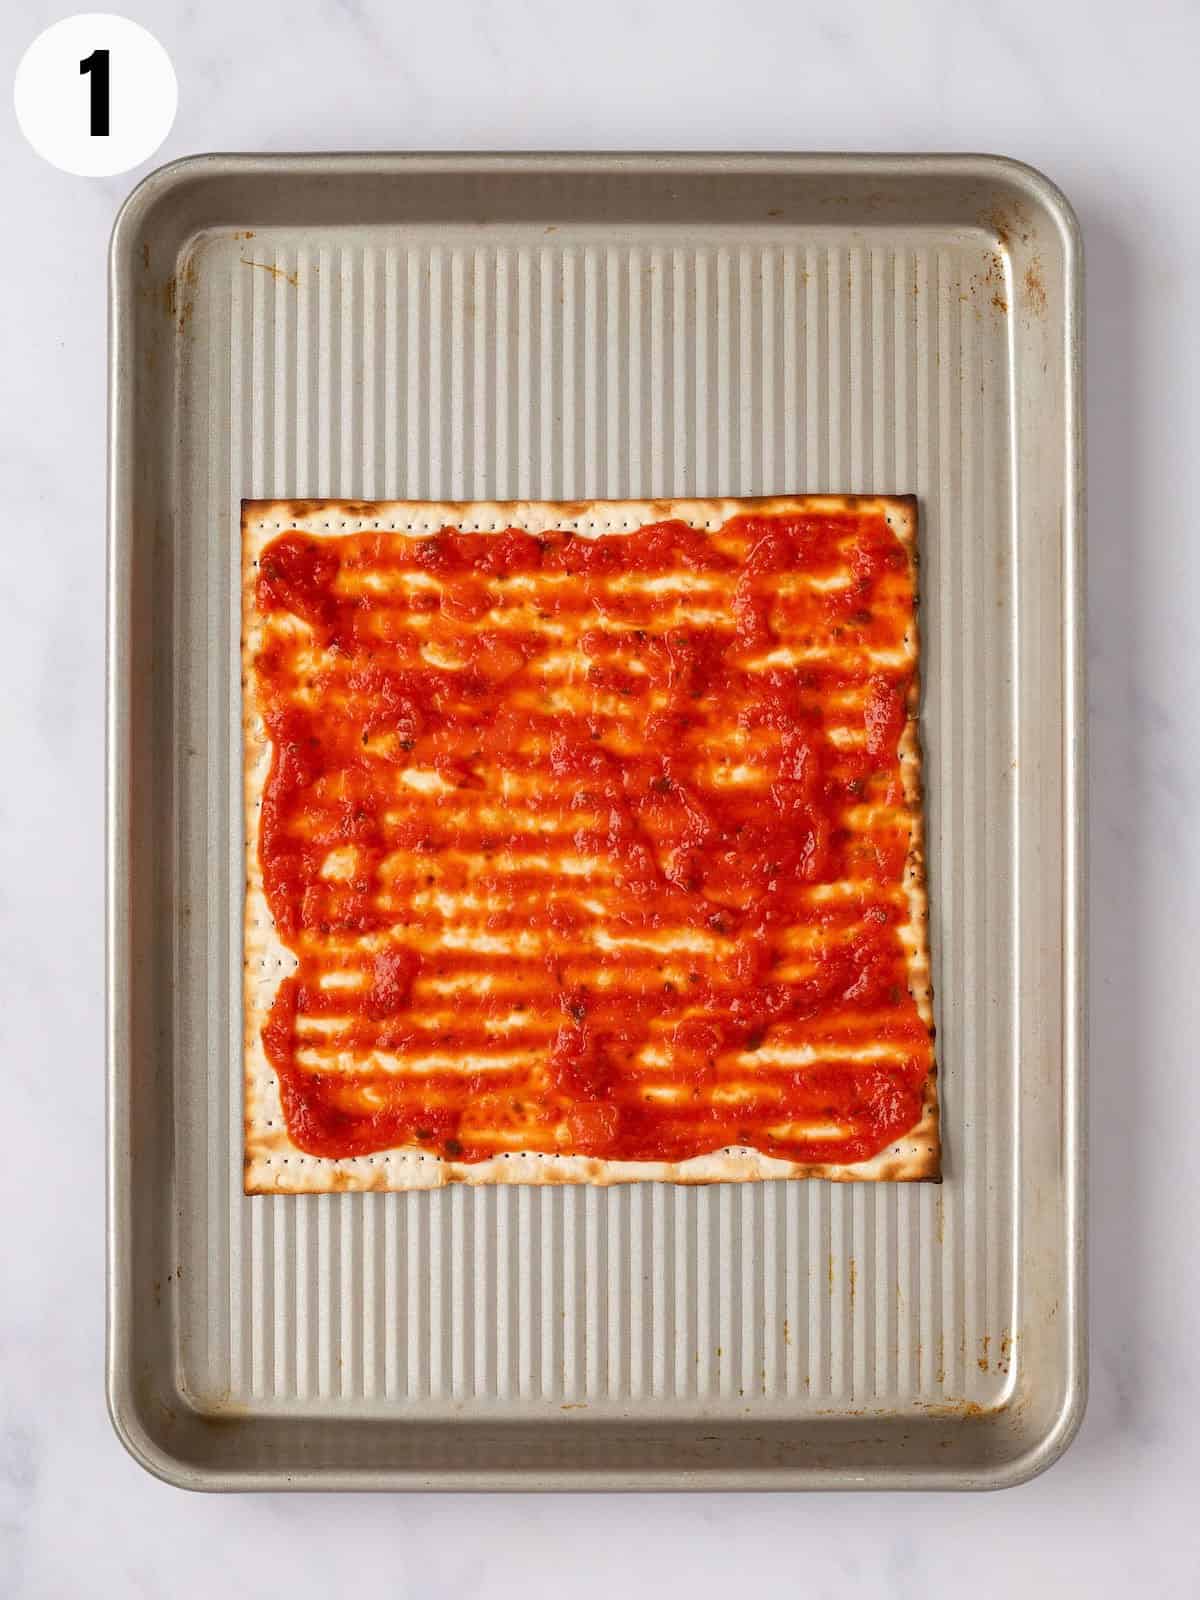 Matzo on a baking sheet topped with marinara sauce.